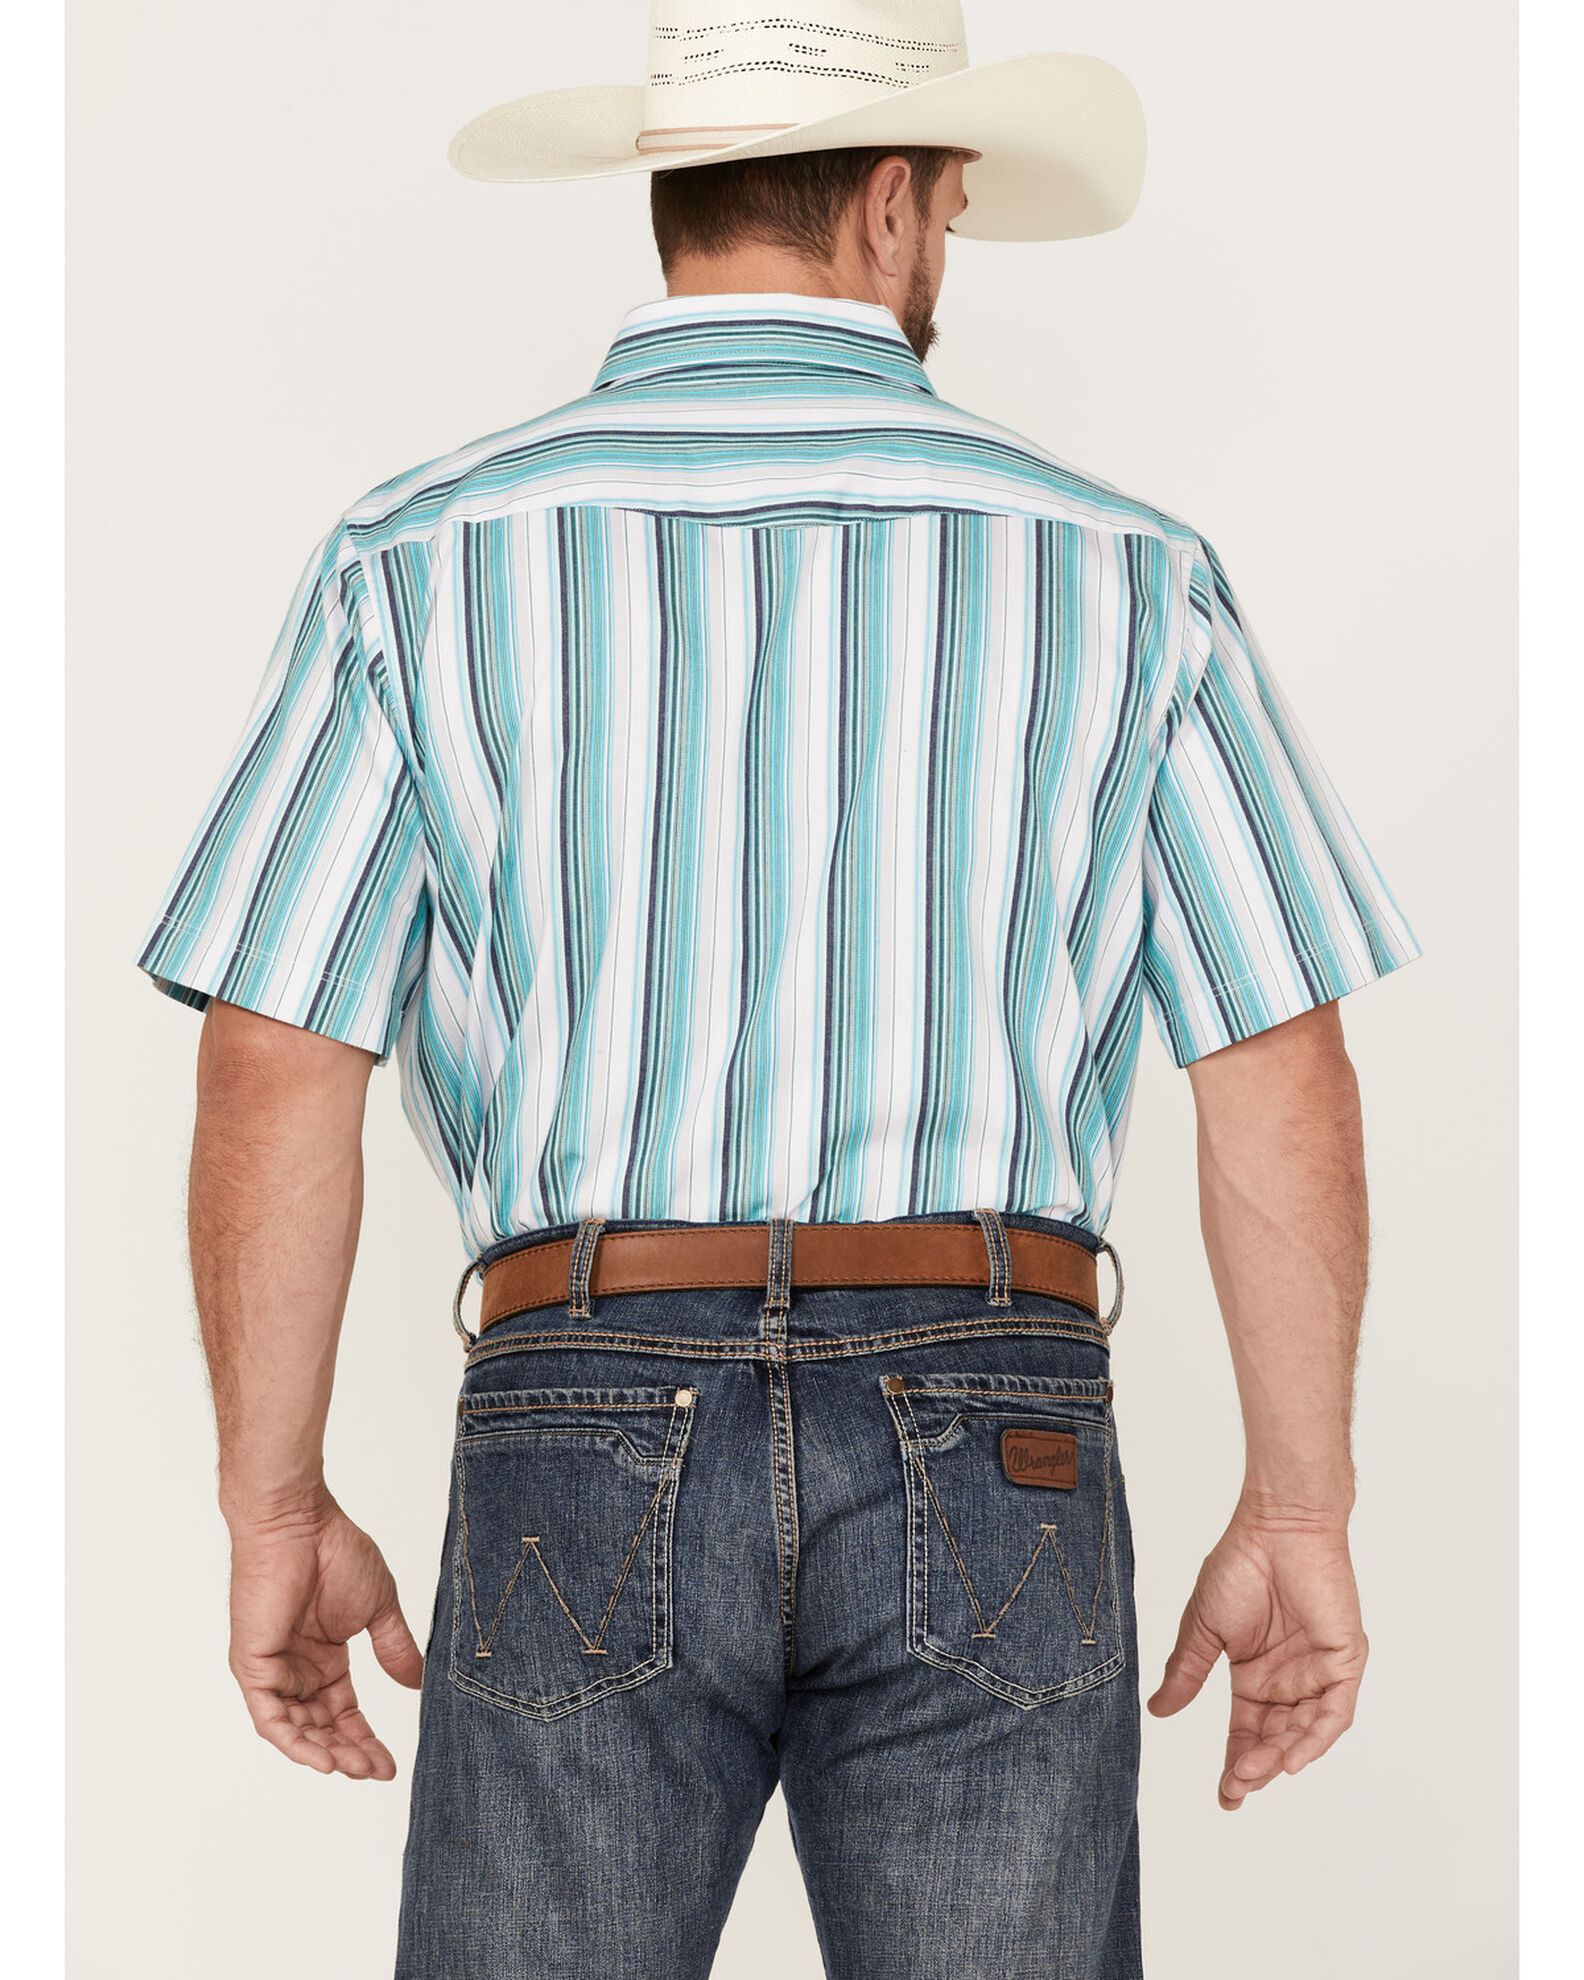 Product Name: Panhandle Select Men's Serape Striped Print Short Sleeve ...